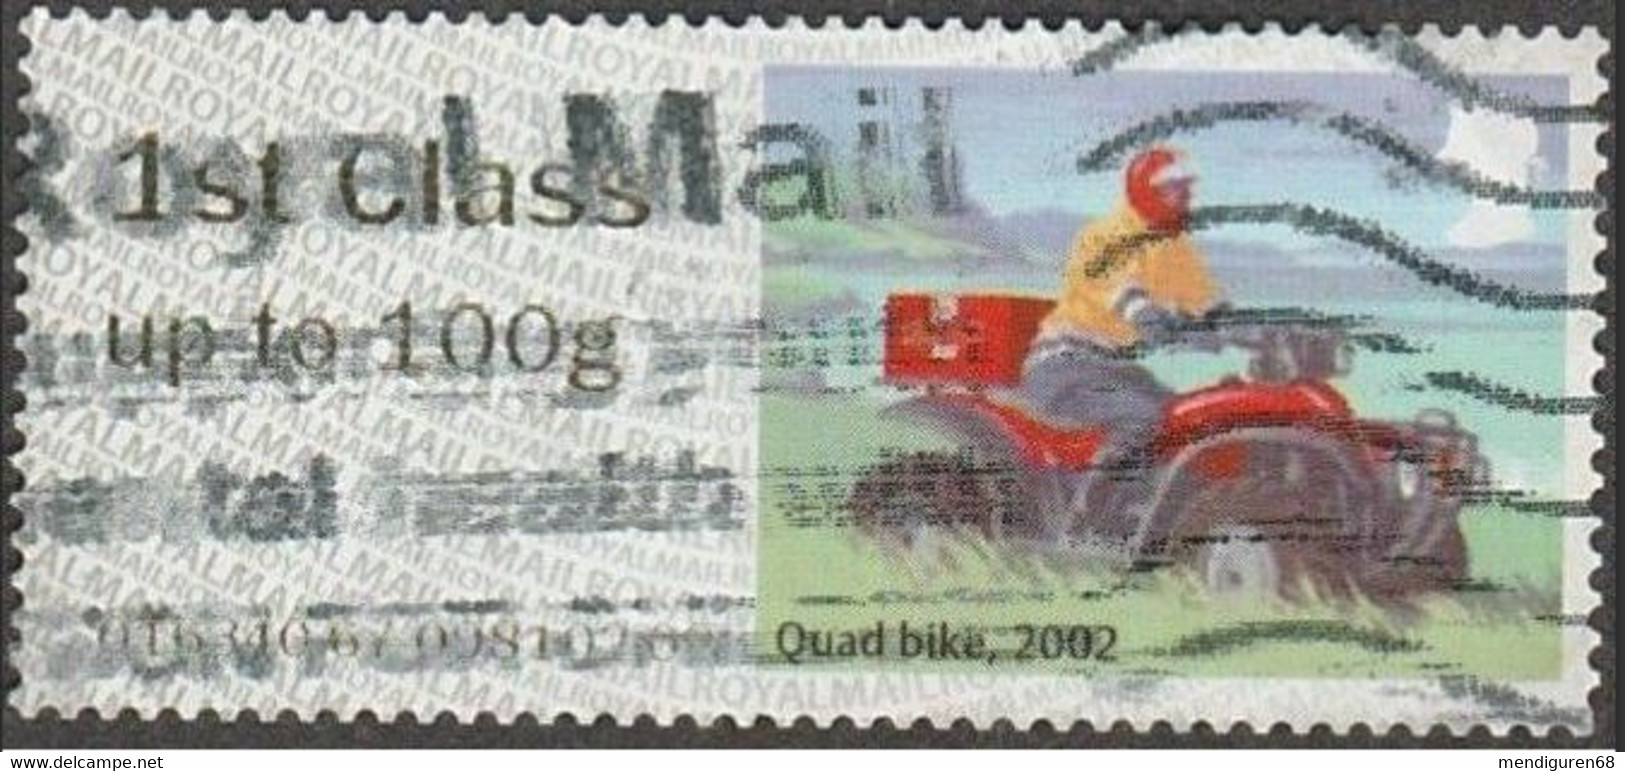 GROSBRITANNIEN GRANDE BRETAGNE GB 2018 POST&GO MAIL BY BIKE: QUAD BIKE 2002 Up To 100g SG FS218 MI AT150 YT D149 - Post & Go Stamps